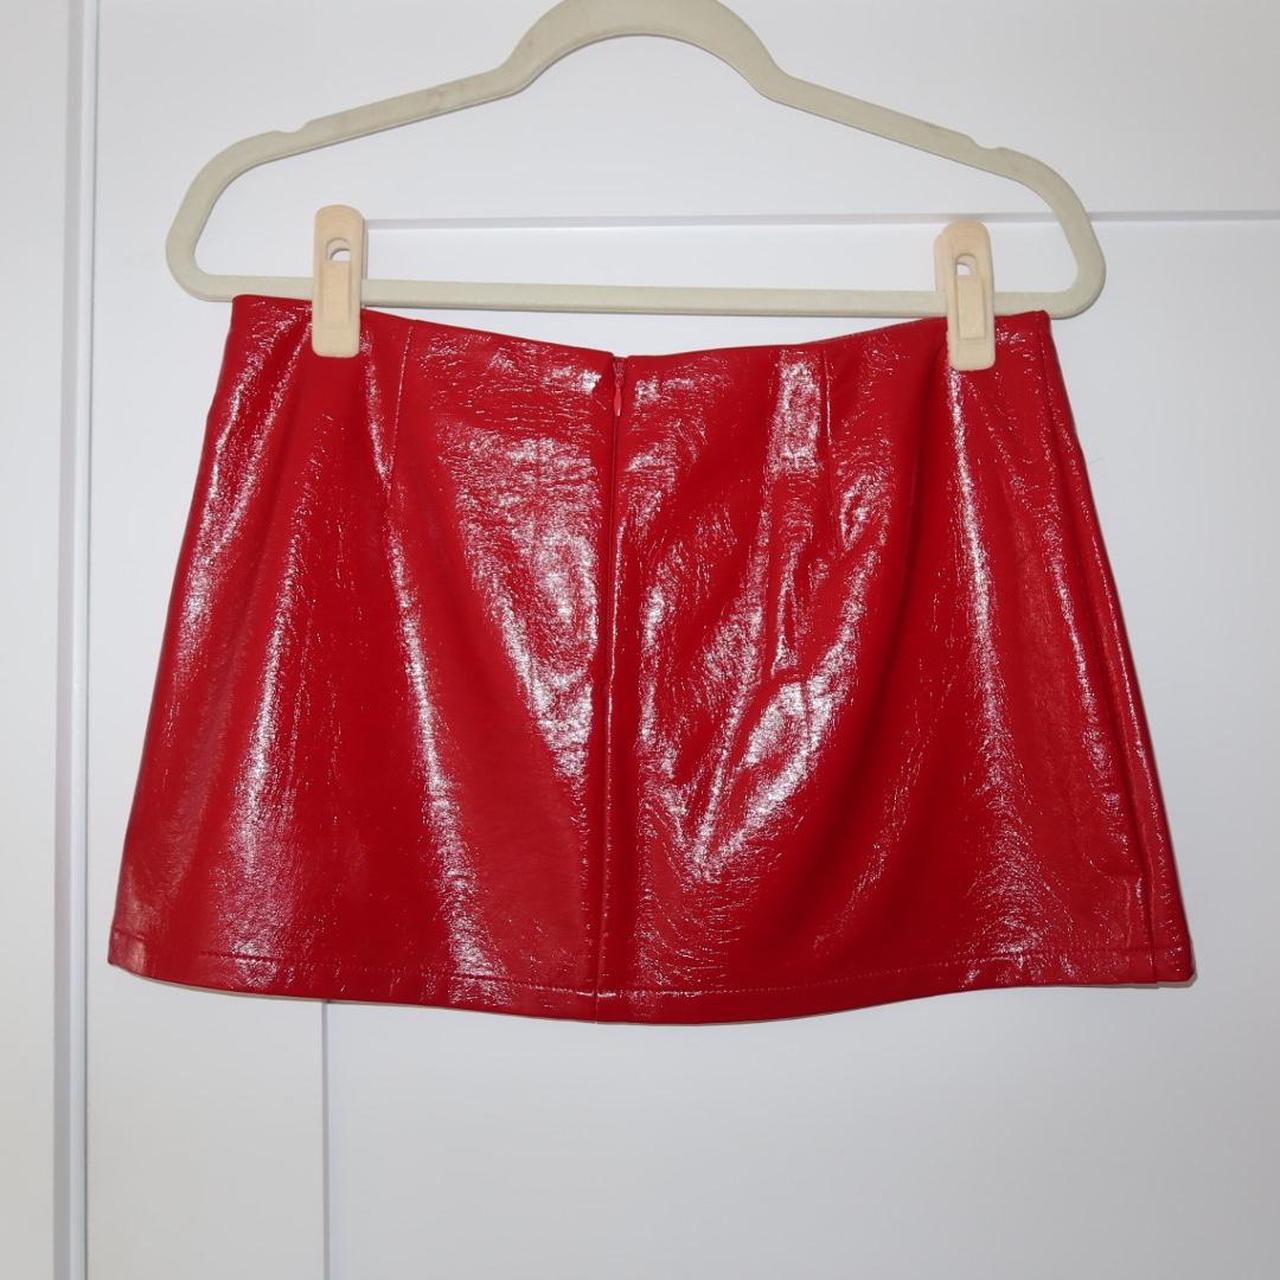 Zara Red Leather Pants #zara #leatherpants #red - Depop